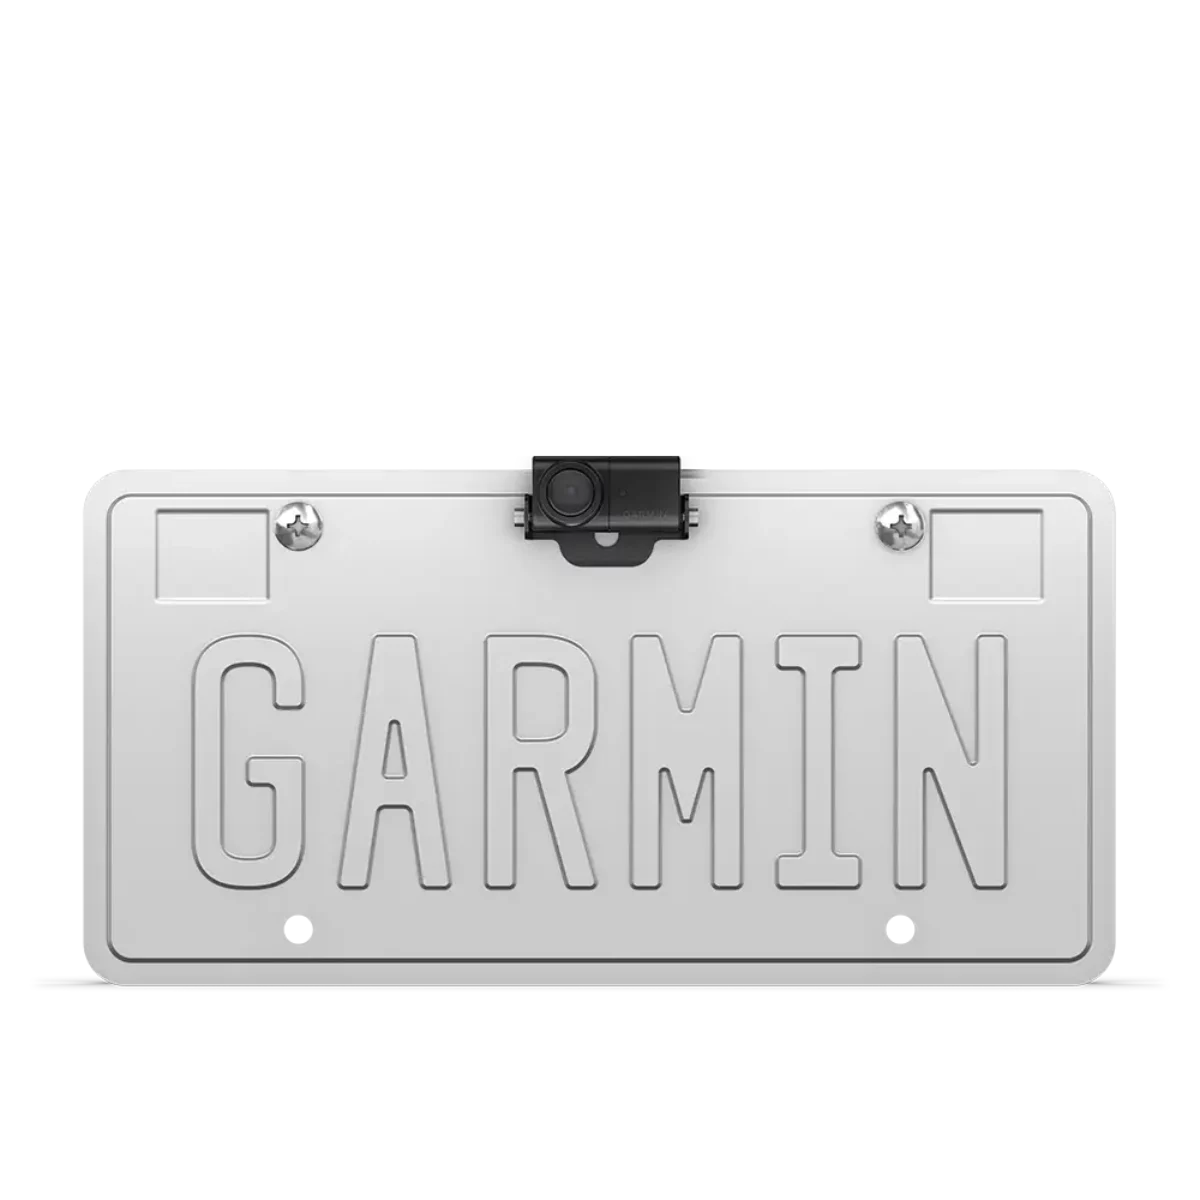 Garmin BC 50 Night Vision Backup Camera mounted on license plate